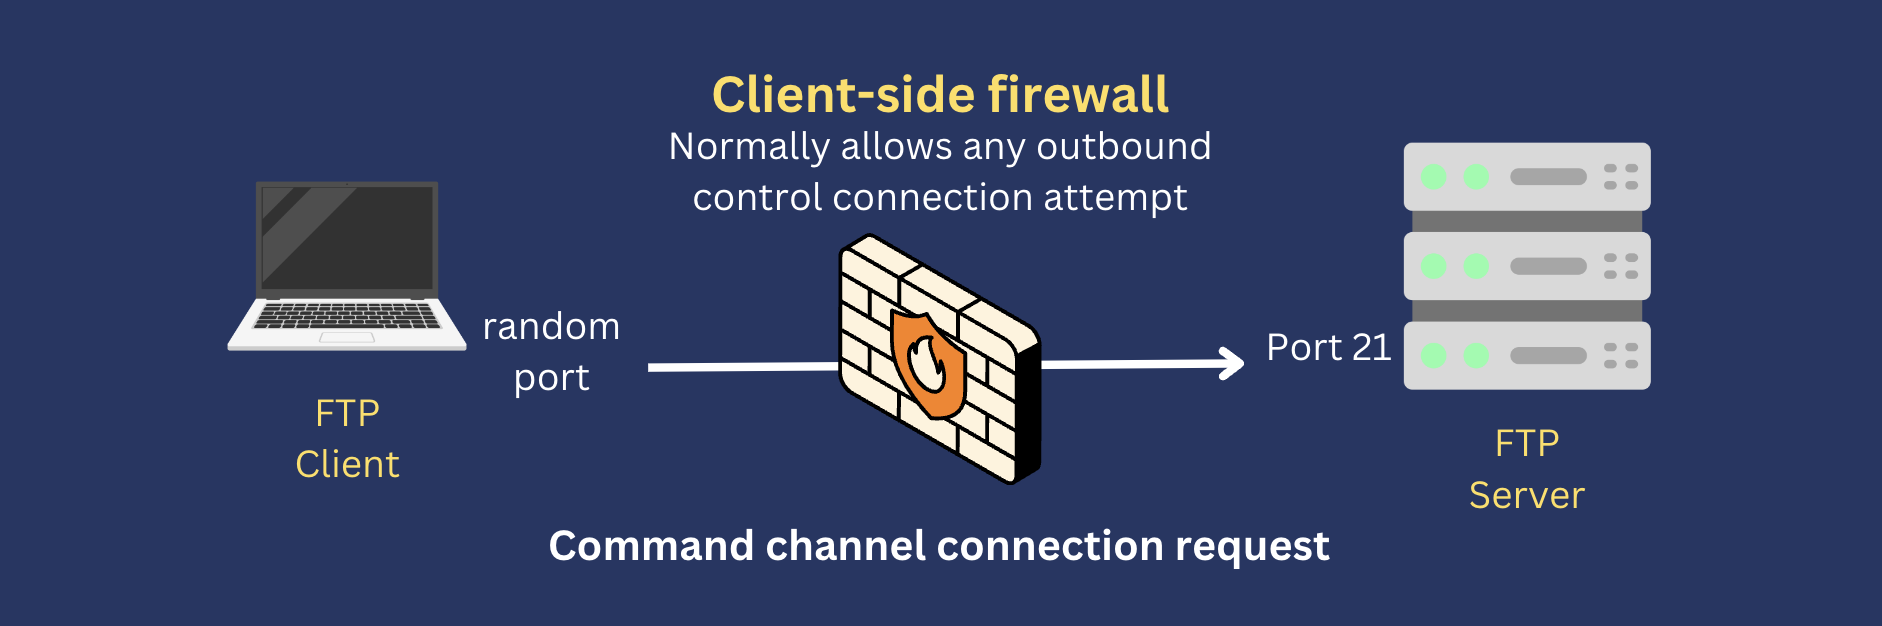 client side firewalls